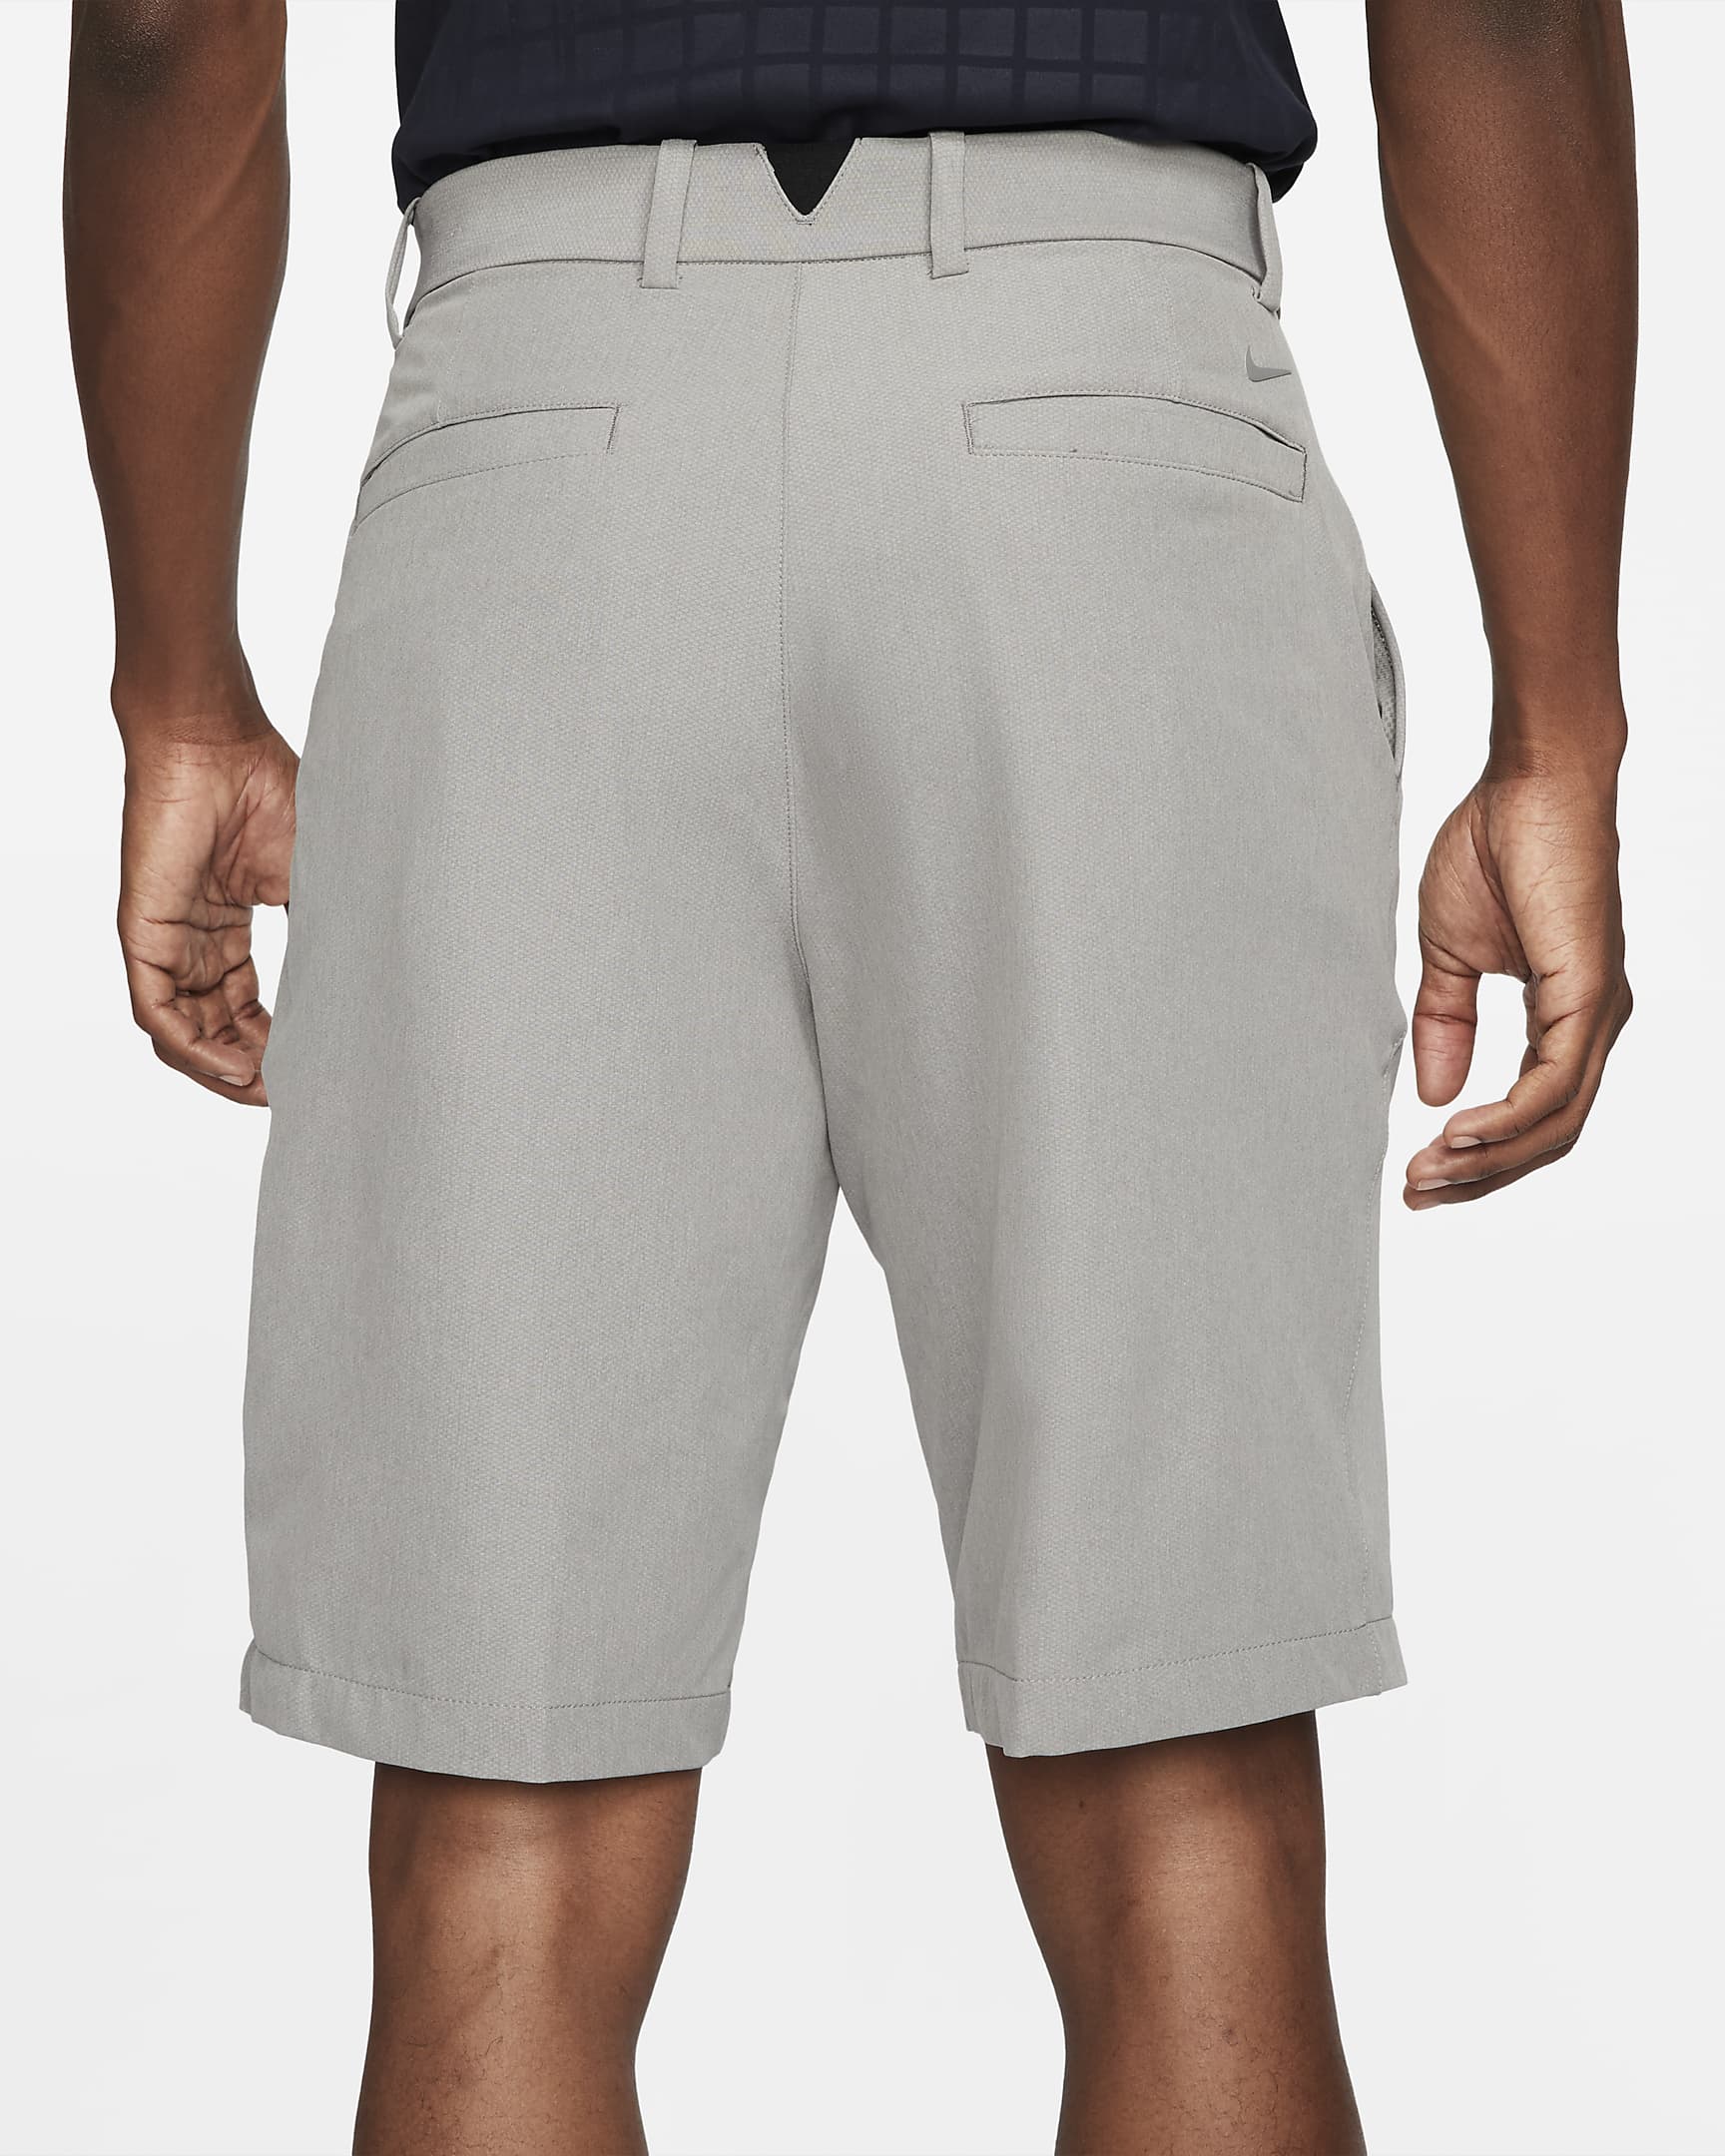 Nike Dri-FIT Men's Golf Shorts - Dust/Pure/Dust